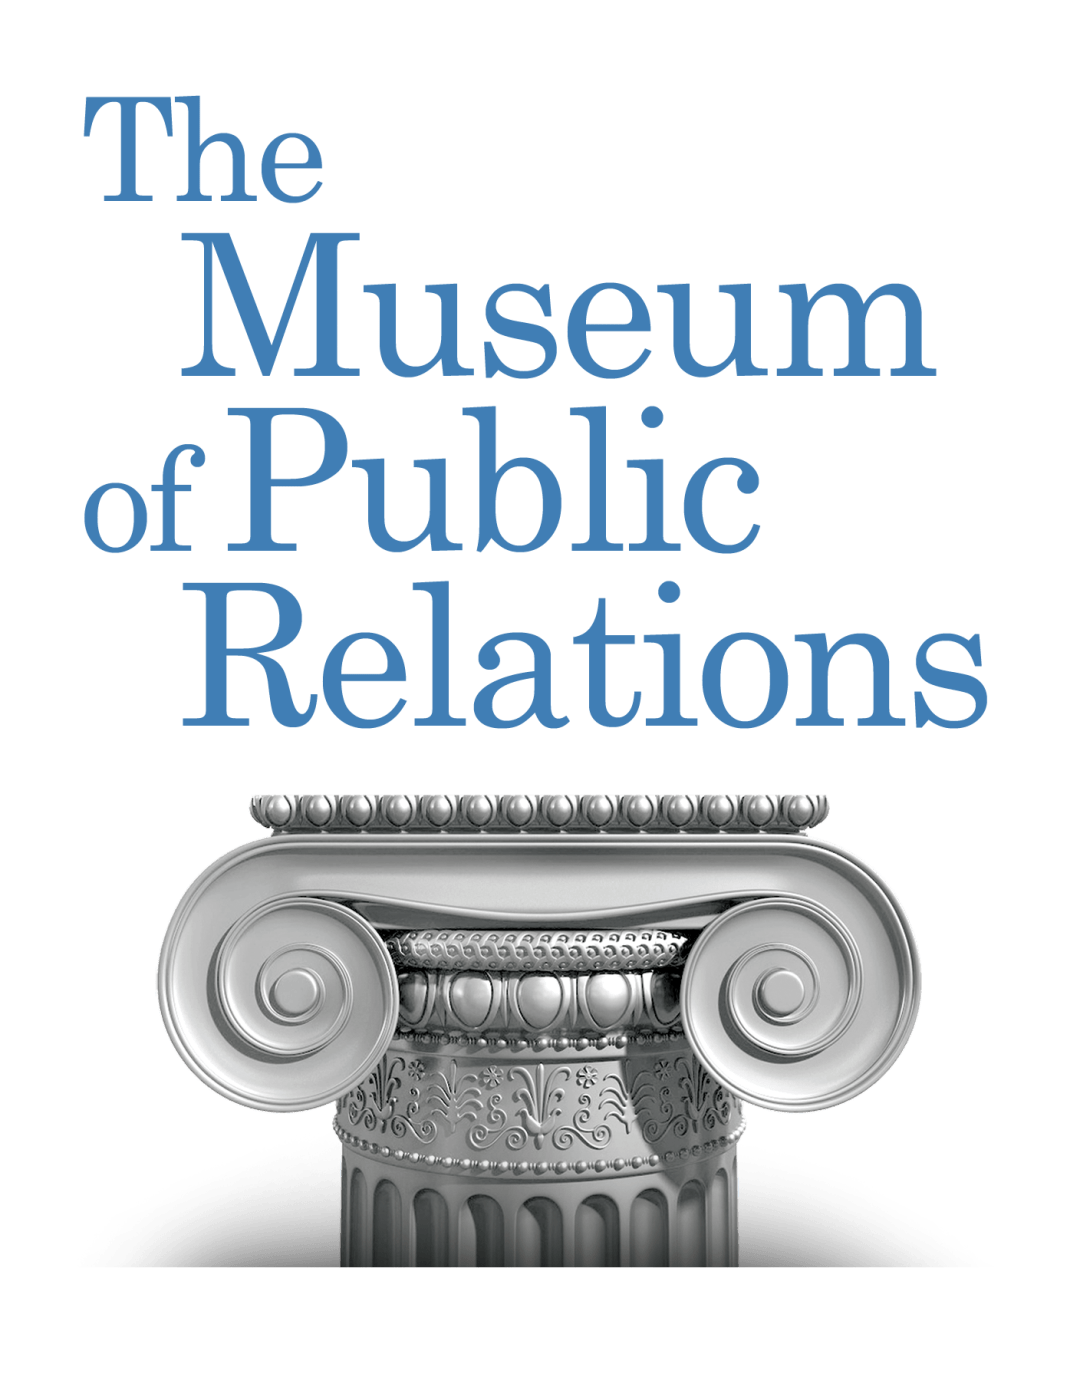 blog-museum-of-pr.png